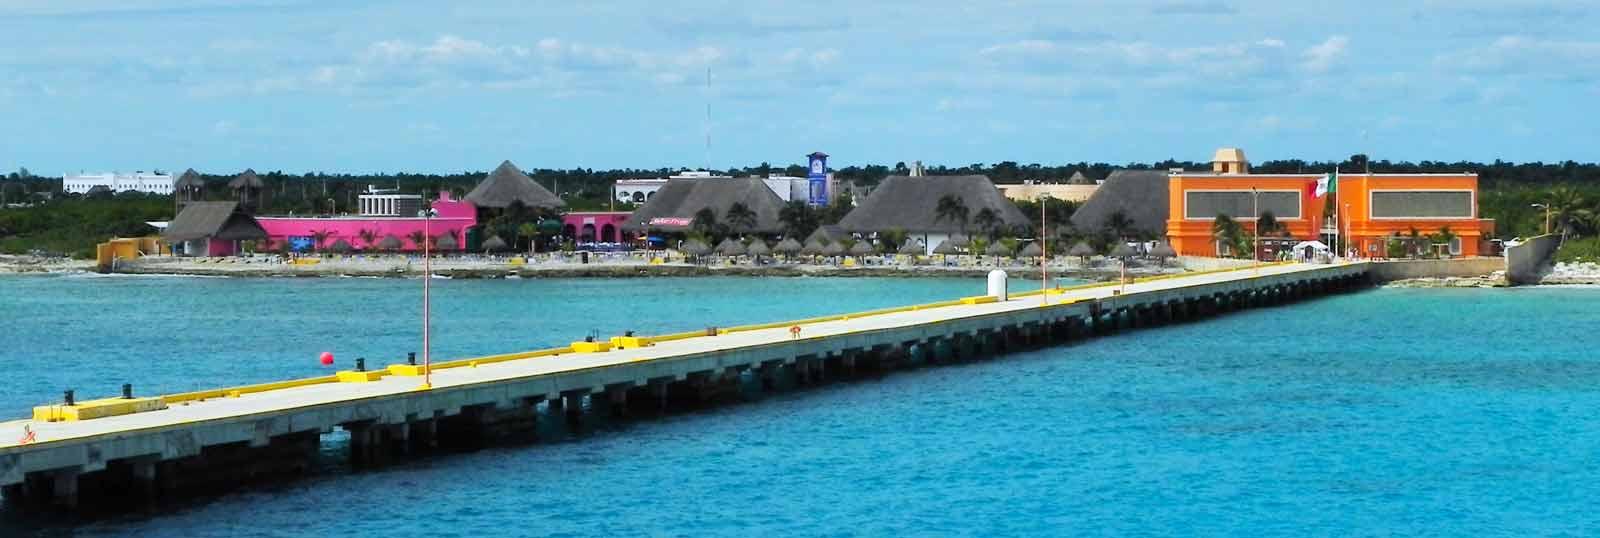 costa maya mexico cruise terminal